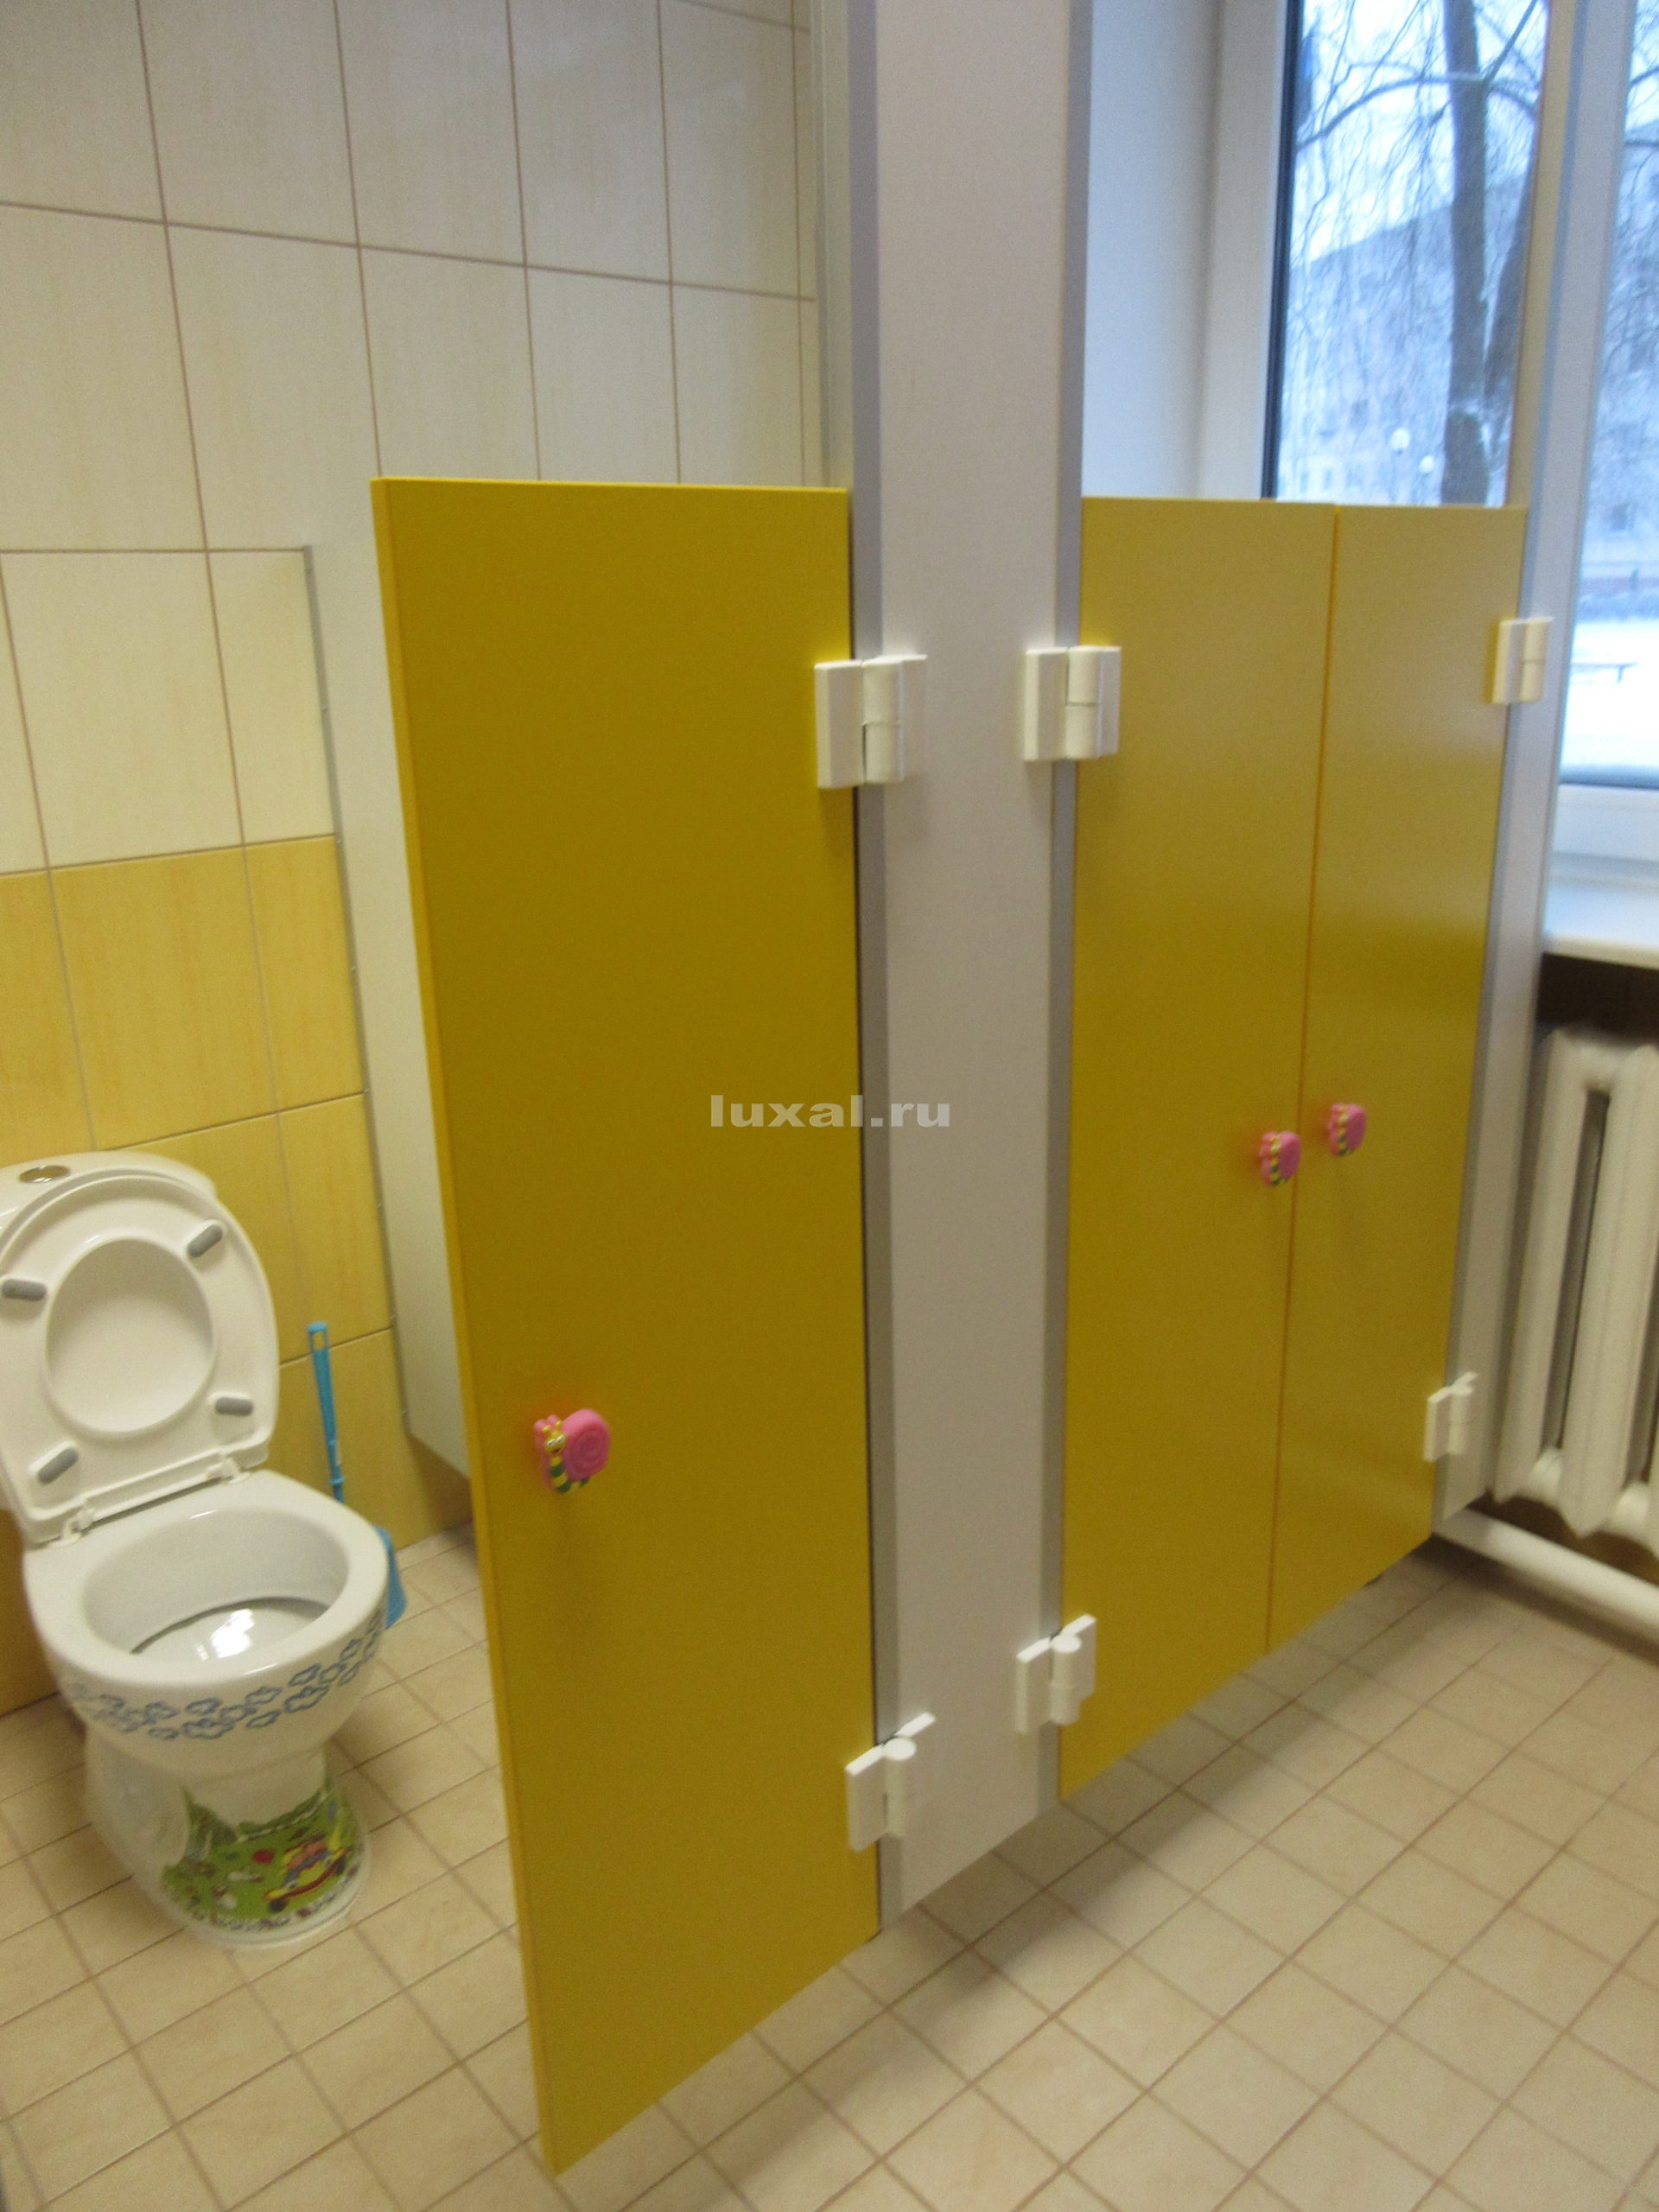 Eurostile Design туалетные кабины